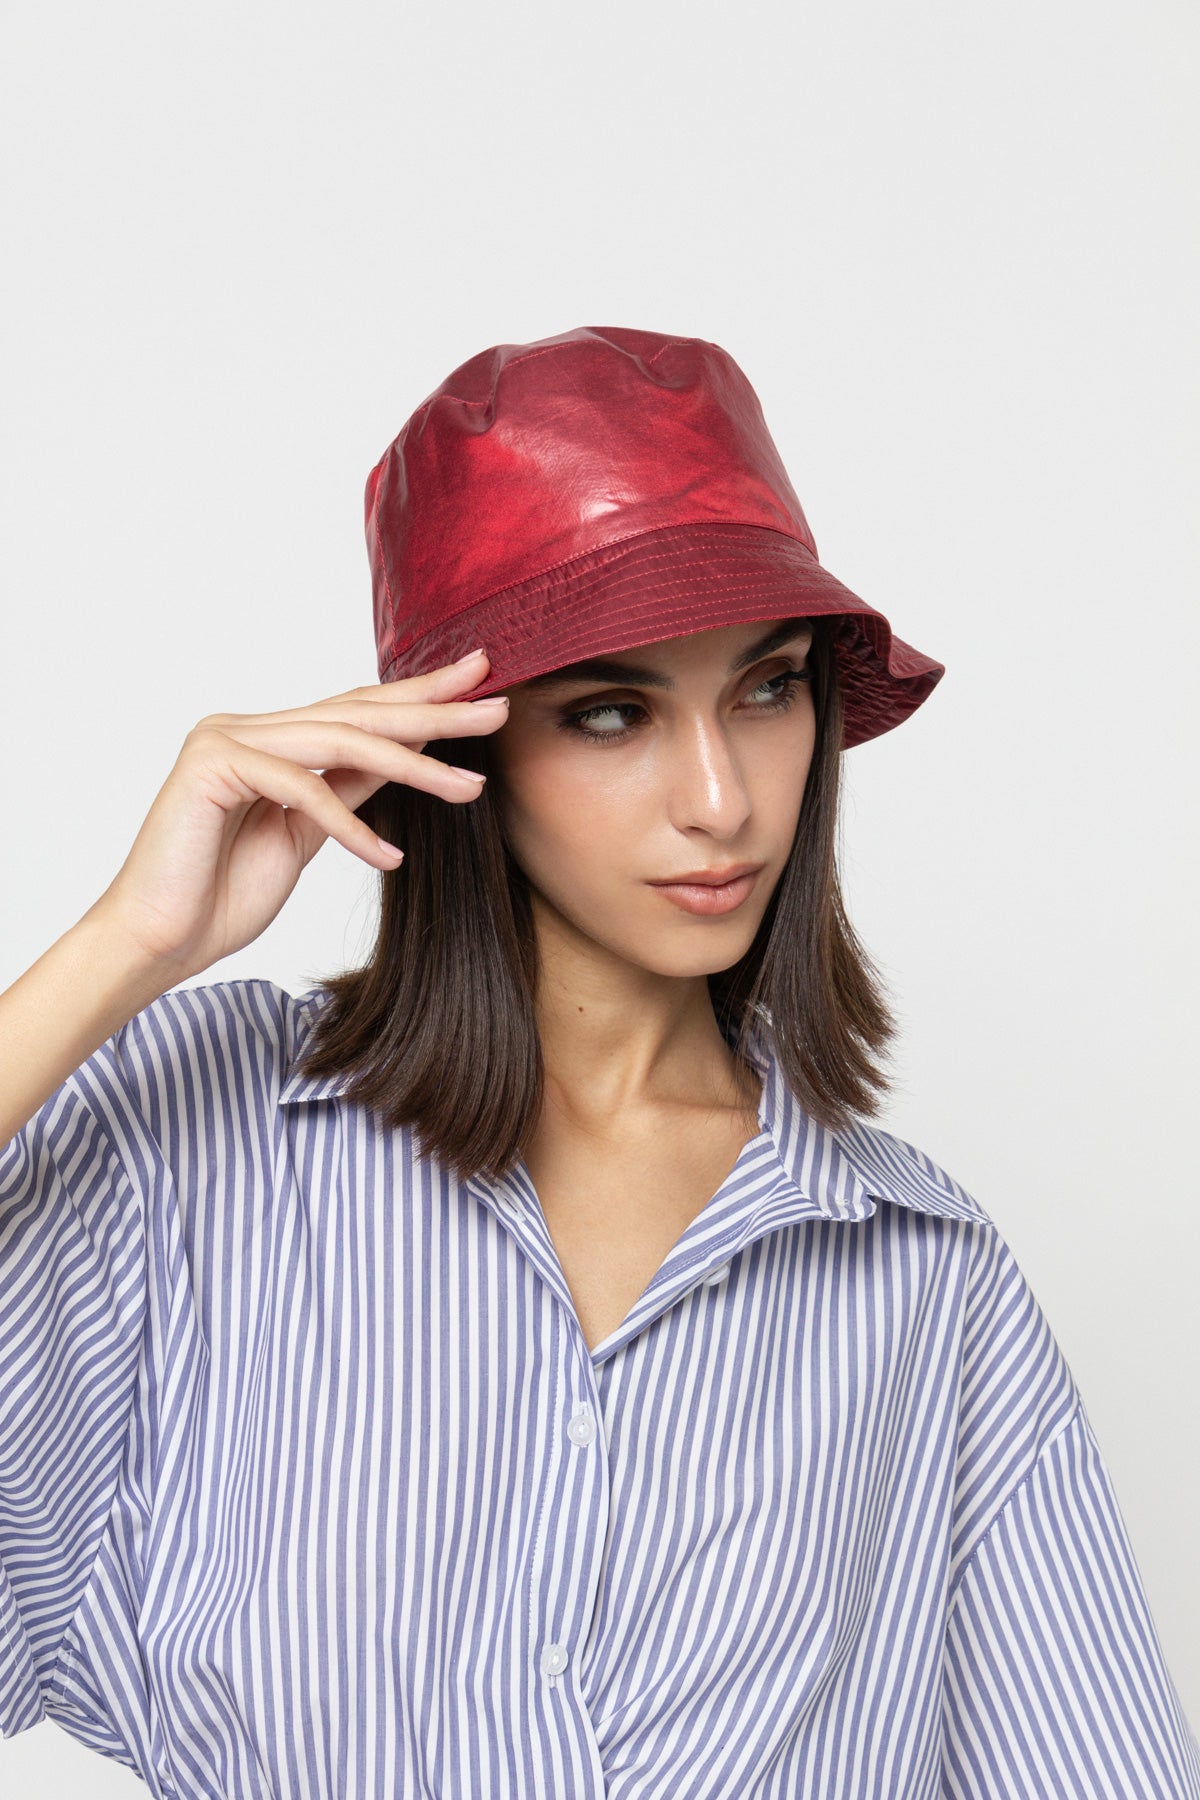 Red Nylon Bucket Hat